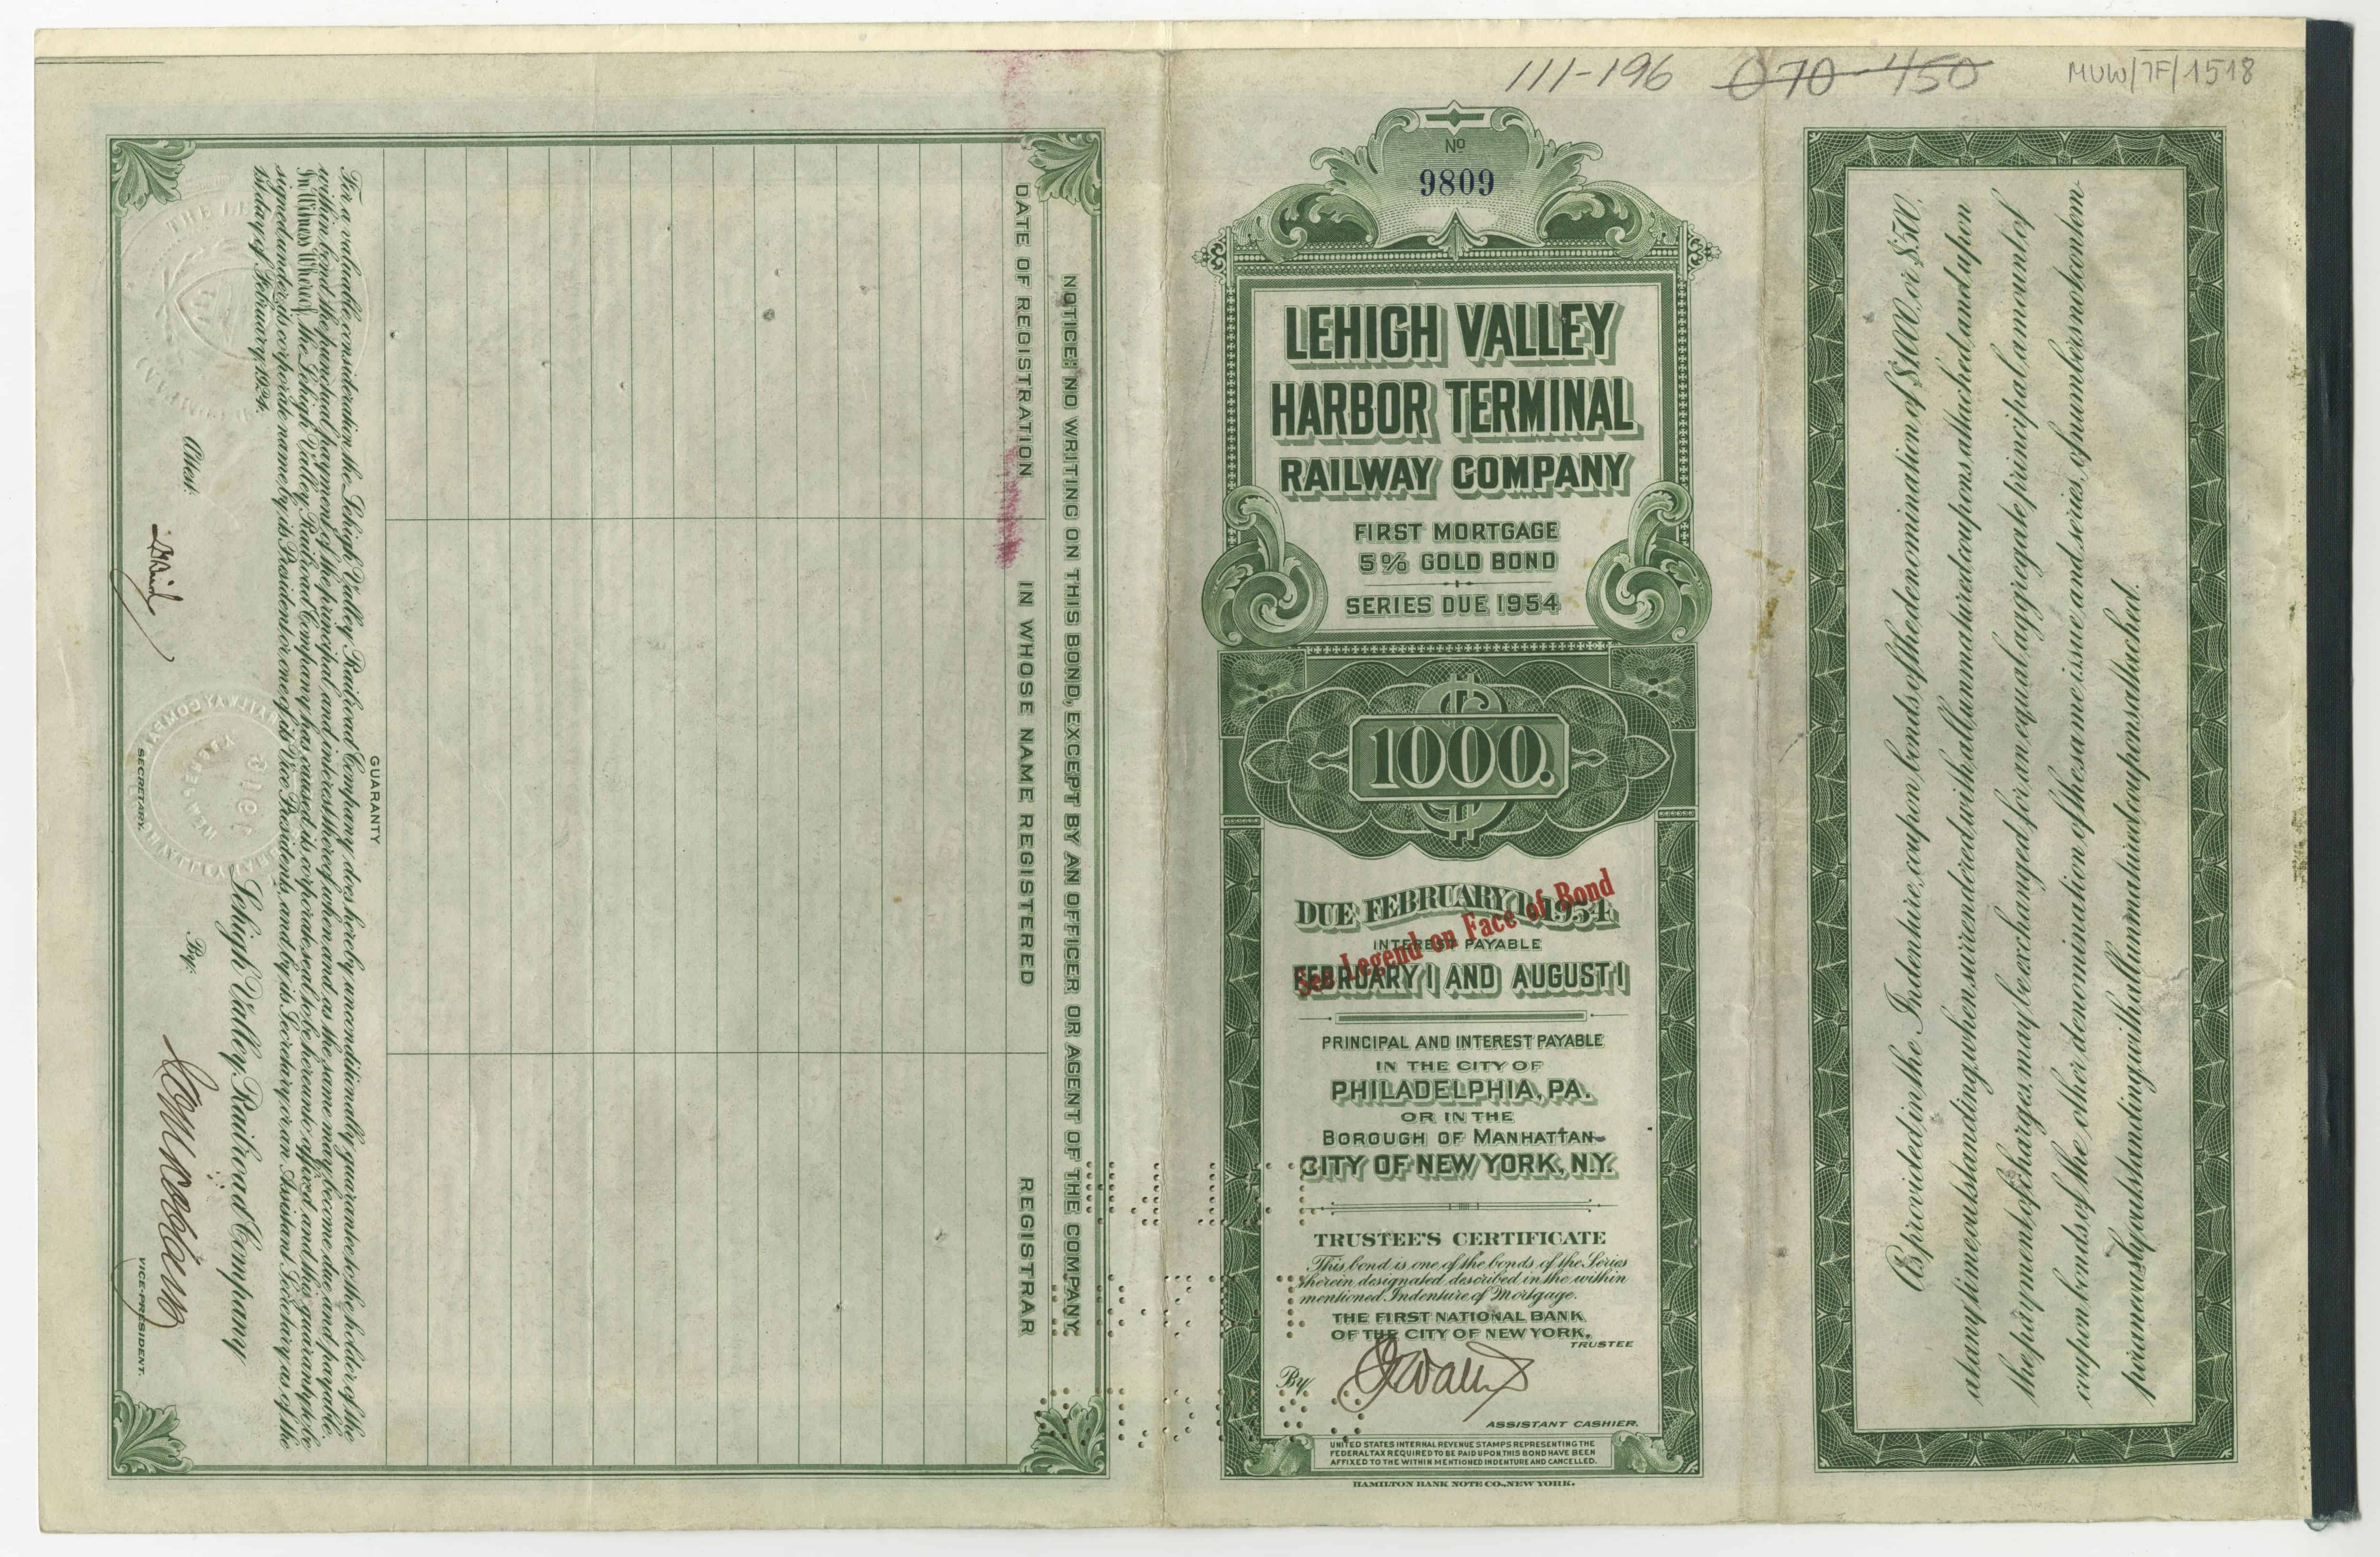 Obligacje Lehigh Valley Harbor Terminal Railway Company z 1 lutego 1924 roku